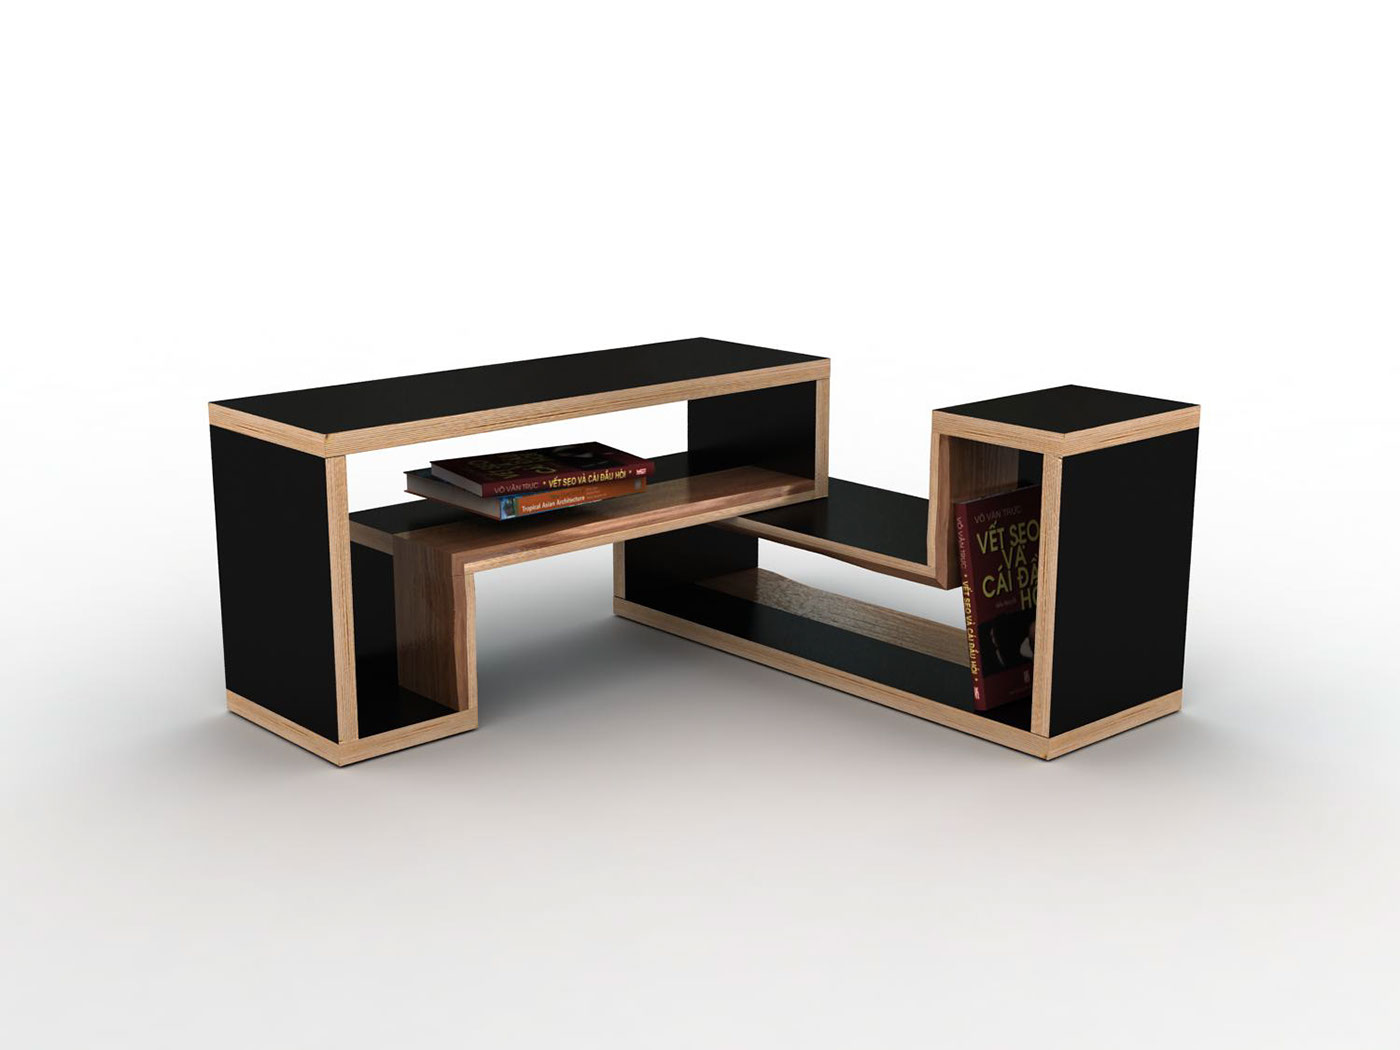 tetris plywood furniture book shelf